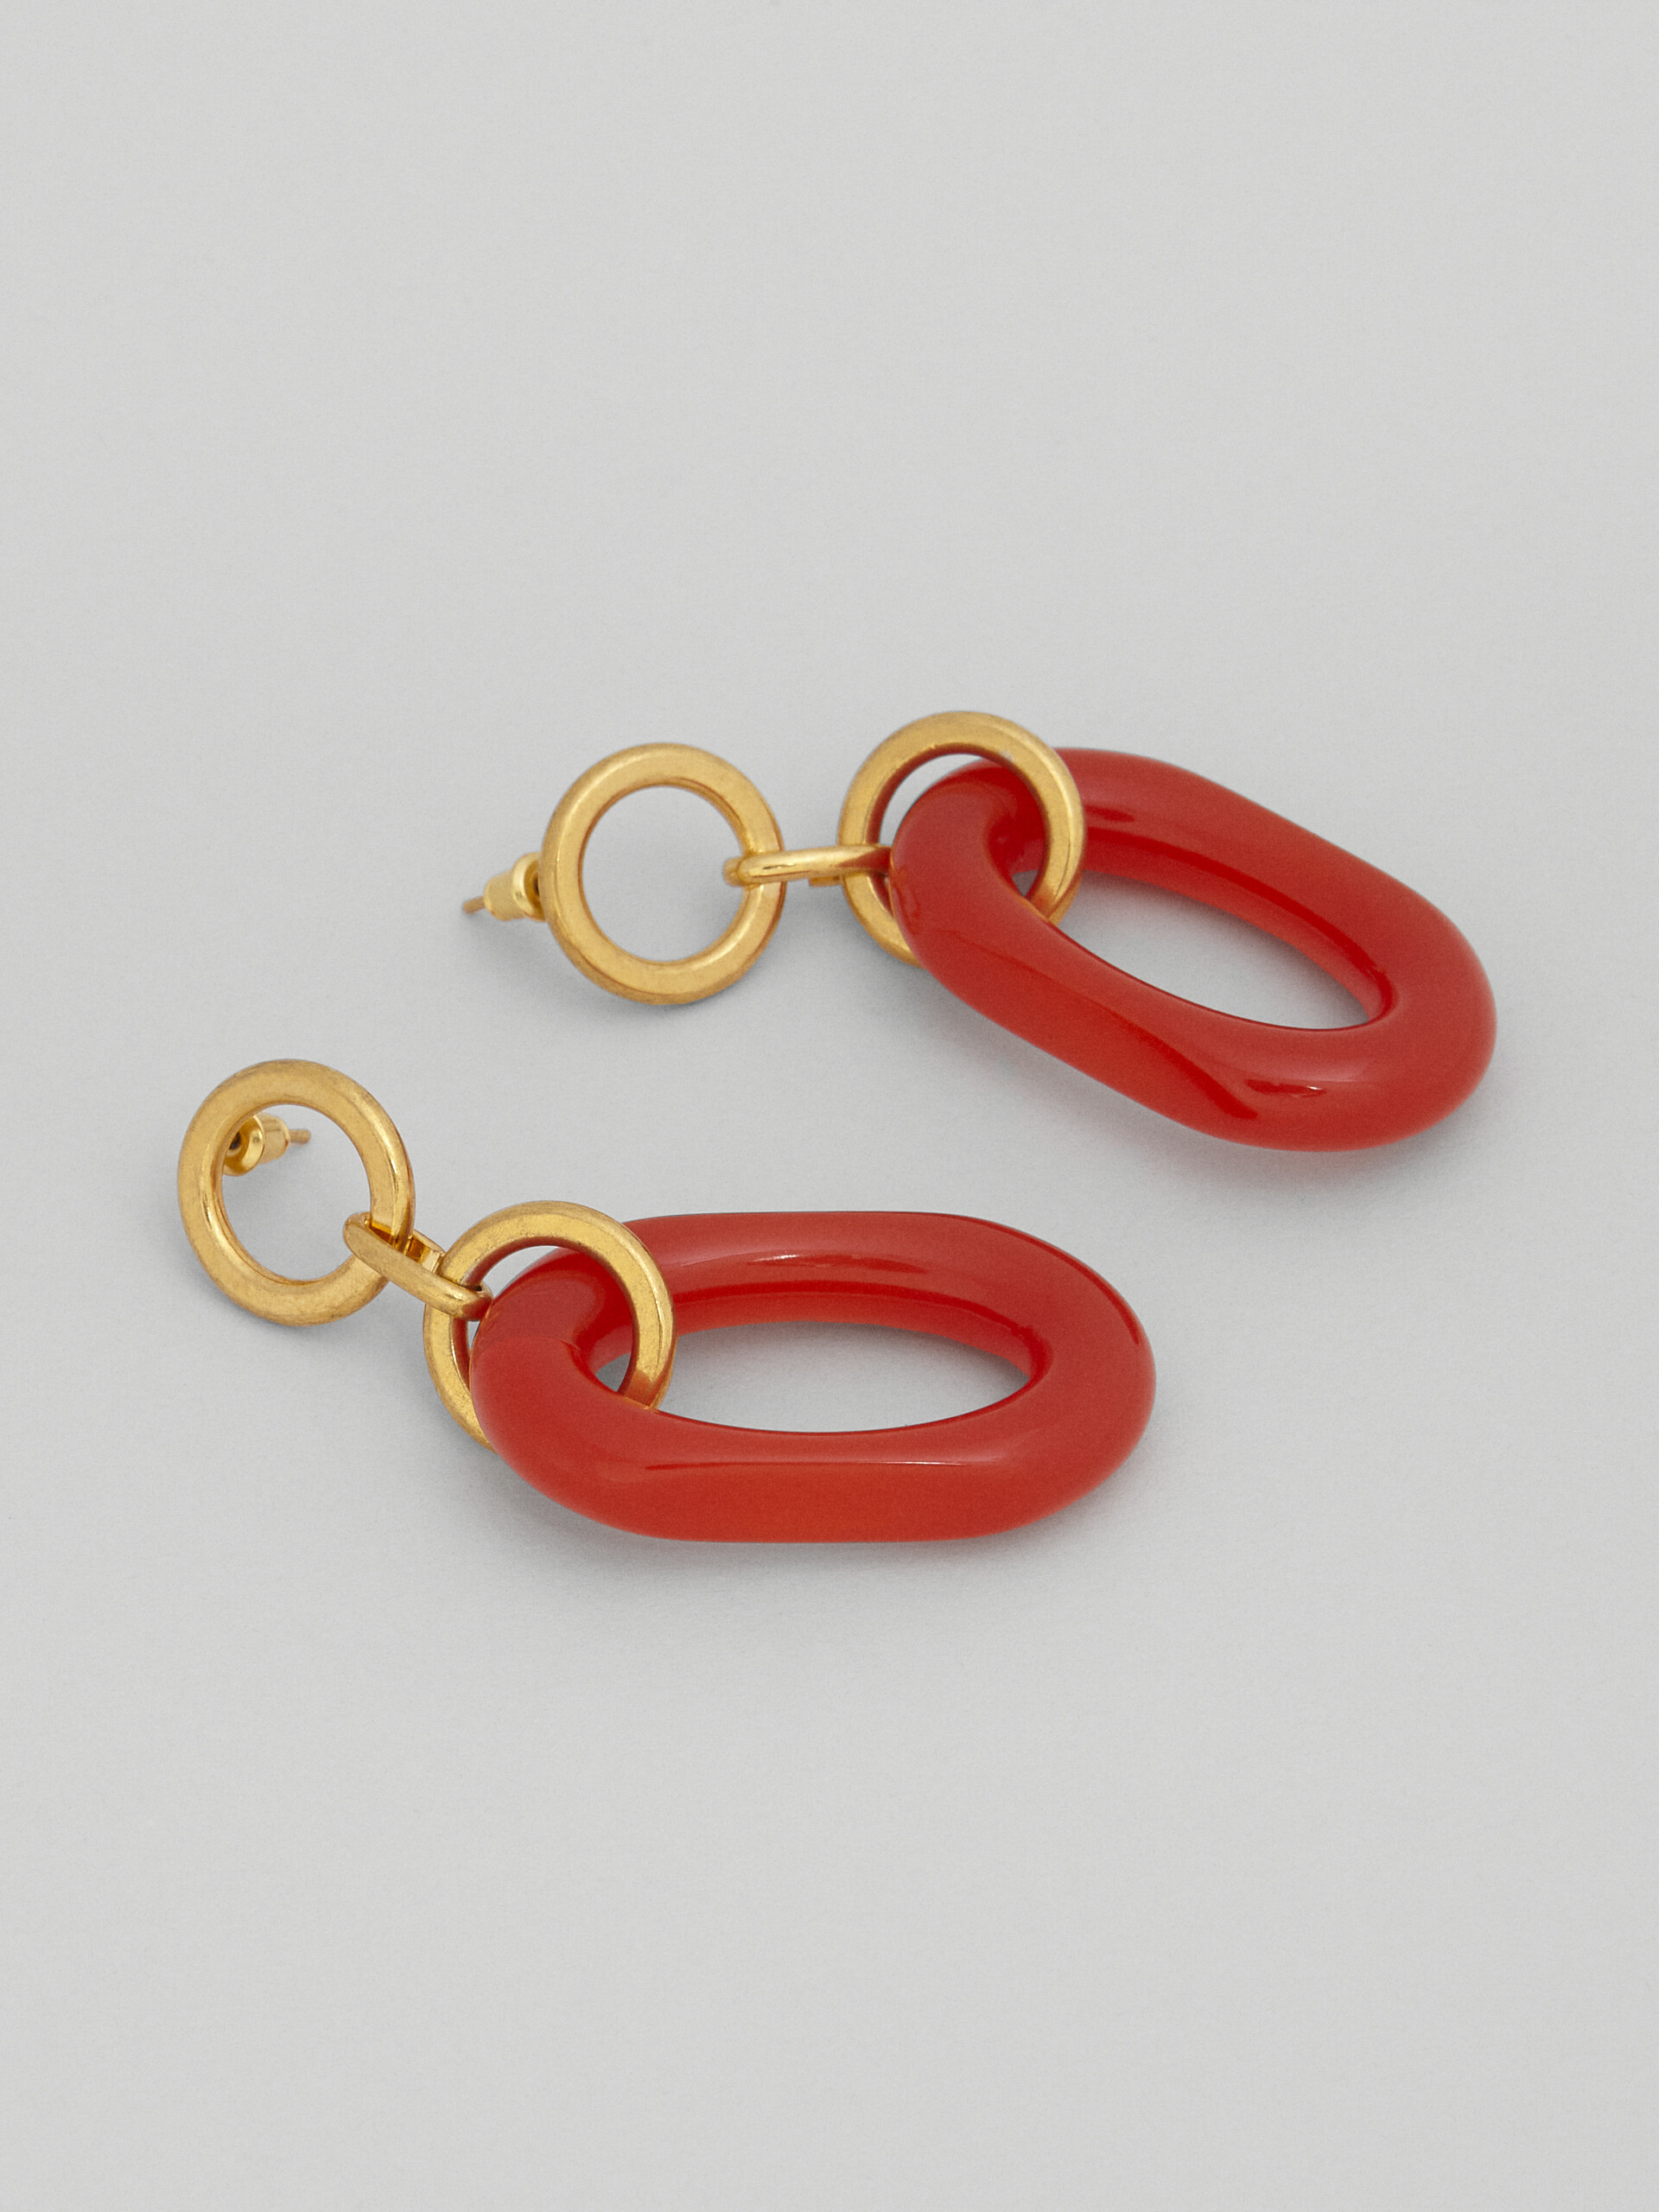 Resin and metal VERTIGO earrings - Earrings - Image 4